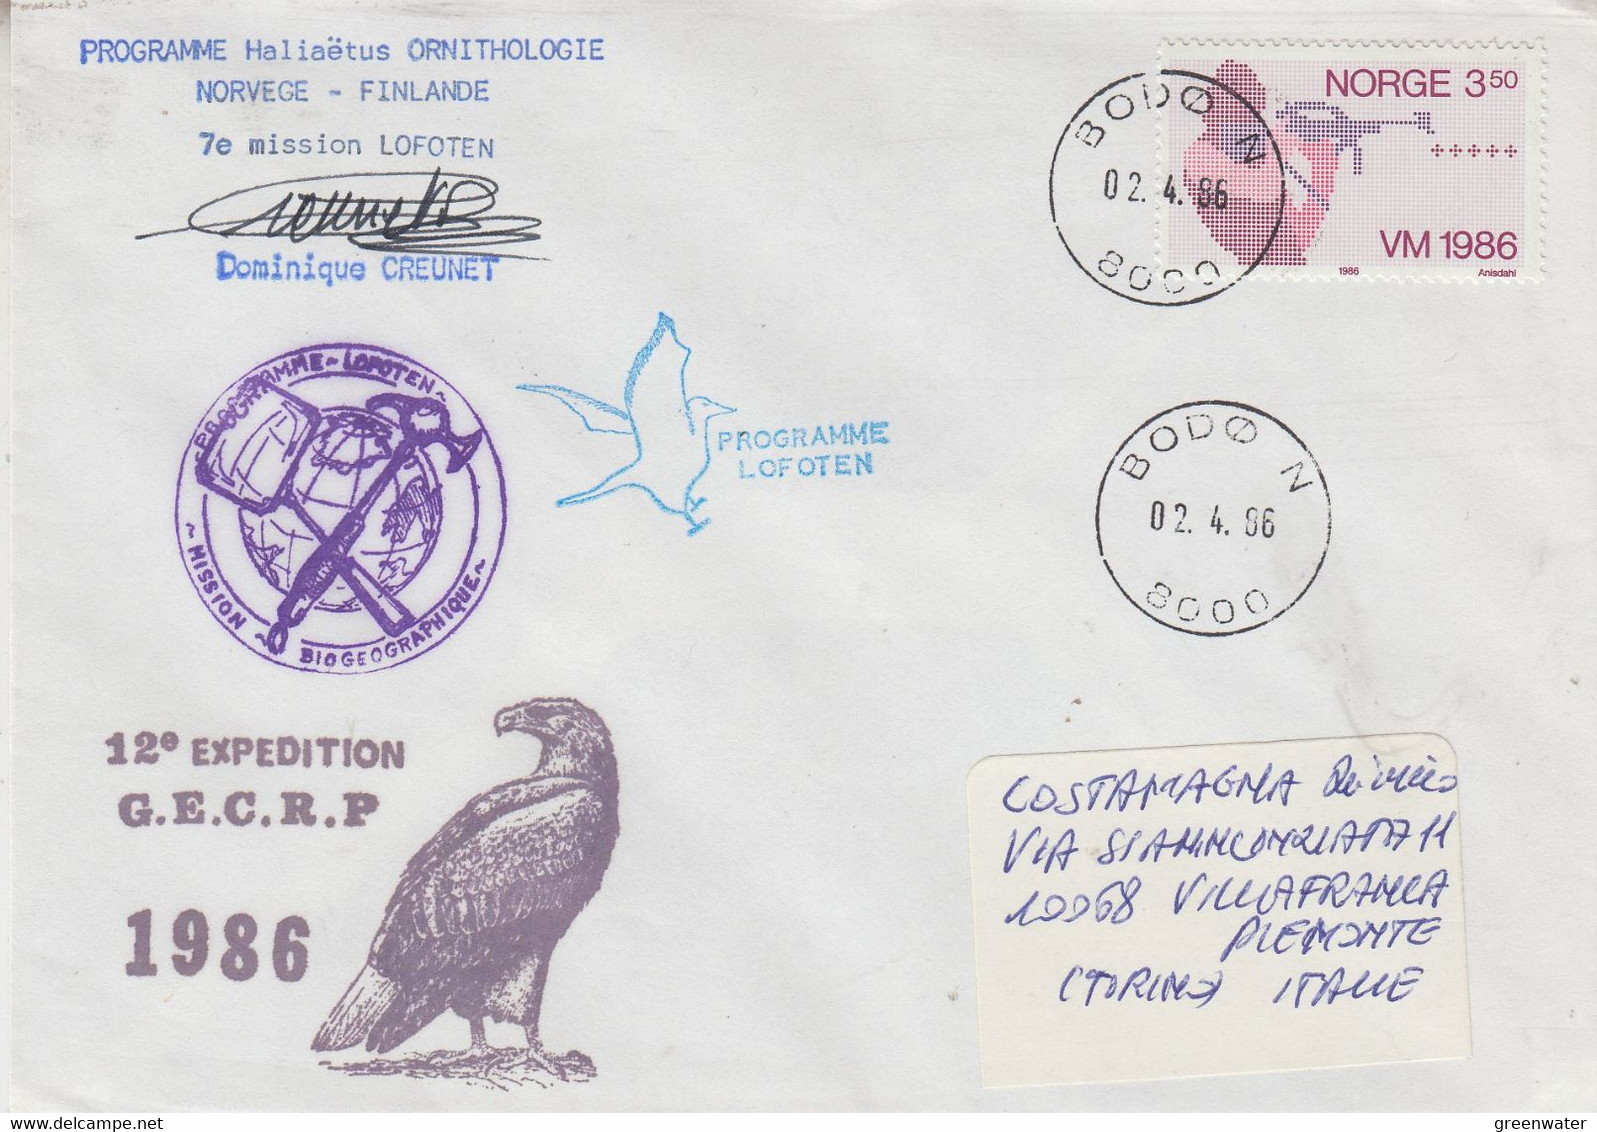 Norway 1986 7e Mission Lofoten Signature Ca Bodo 02-4-1986 (58152) - Forschungsprogramme